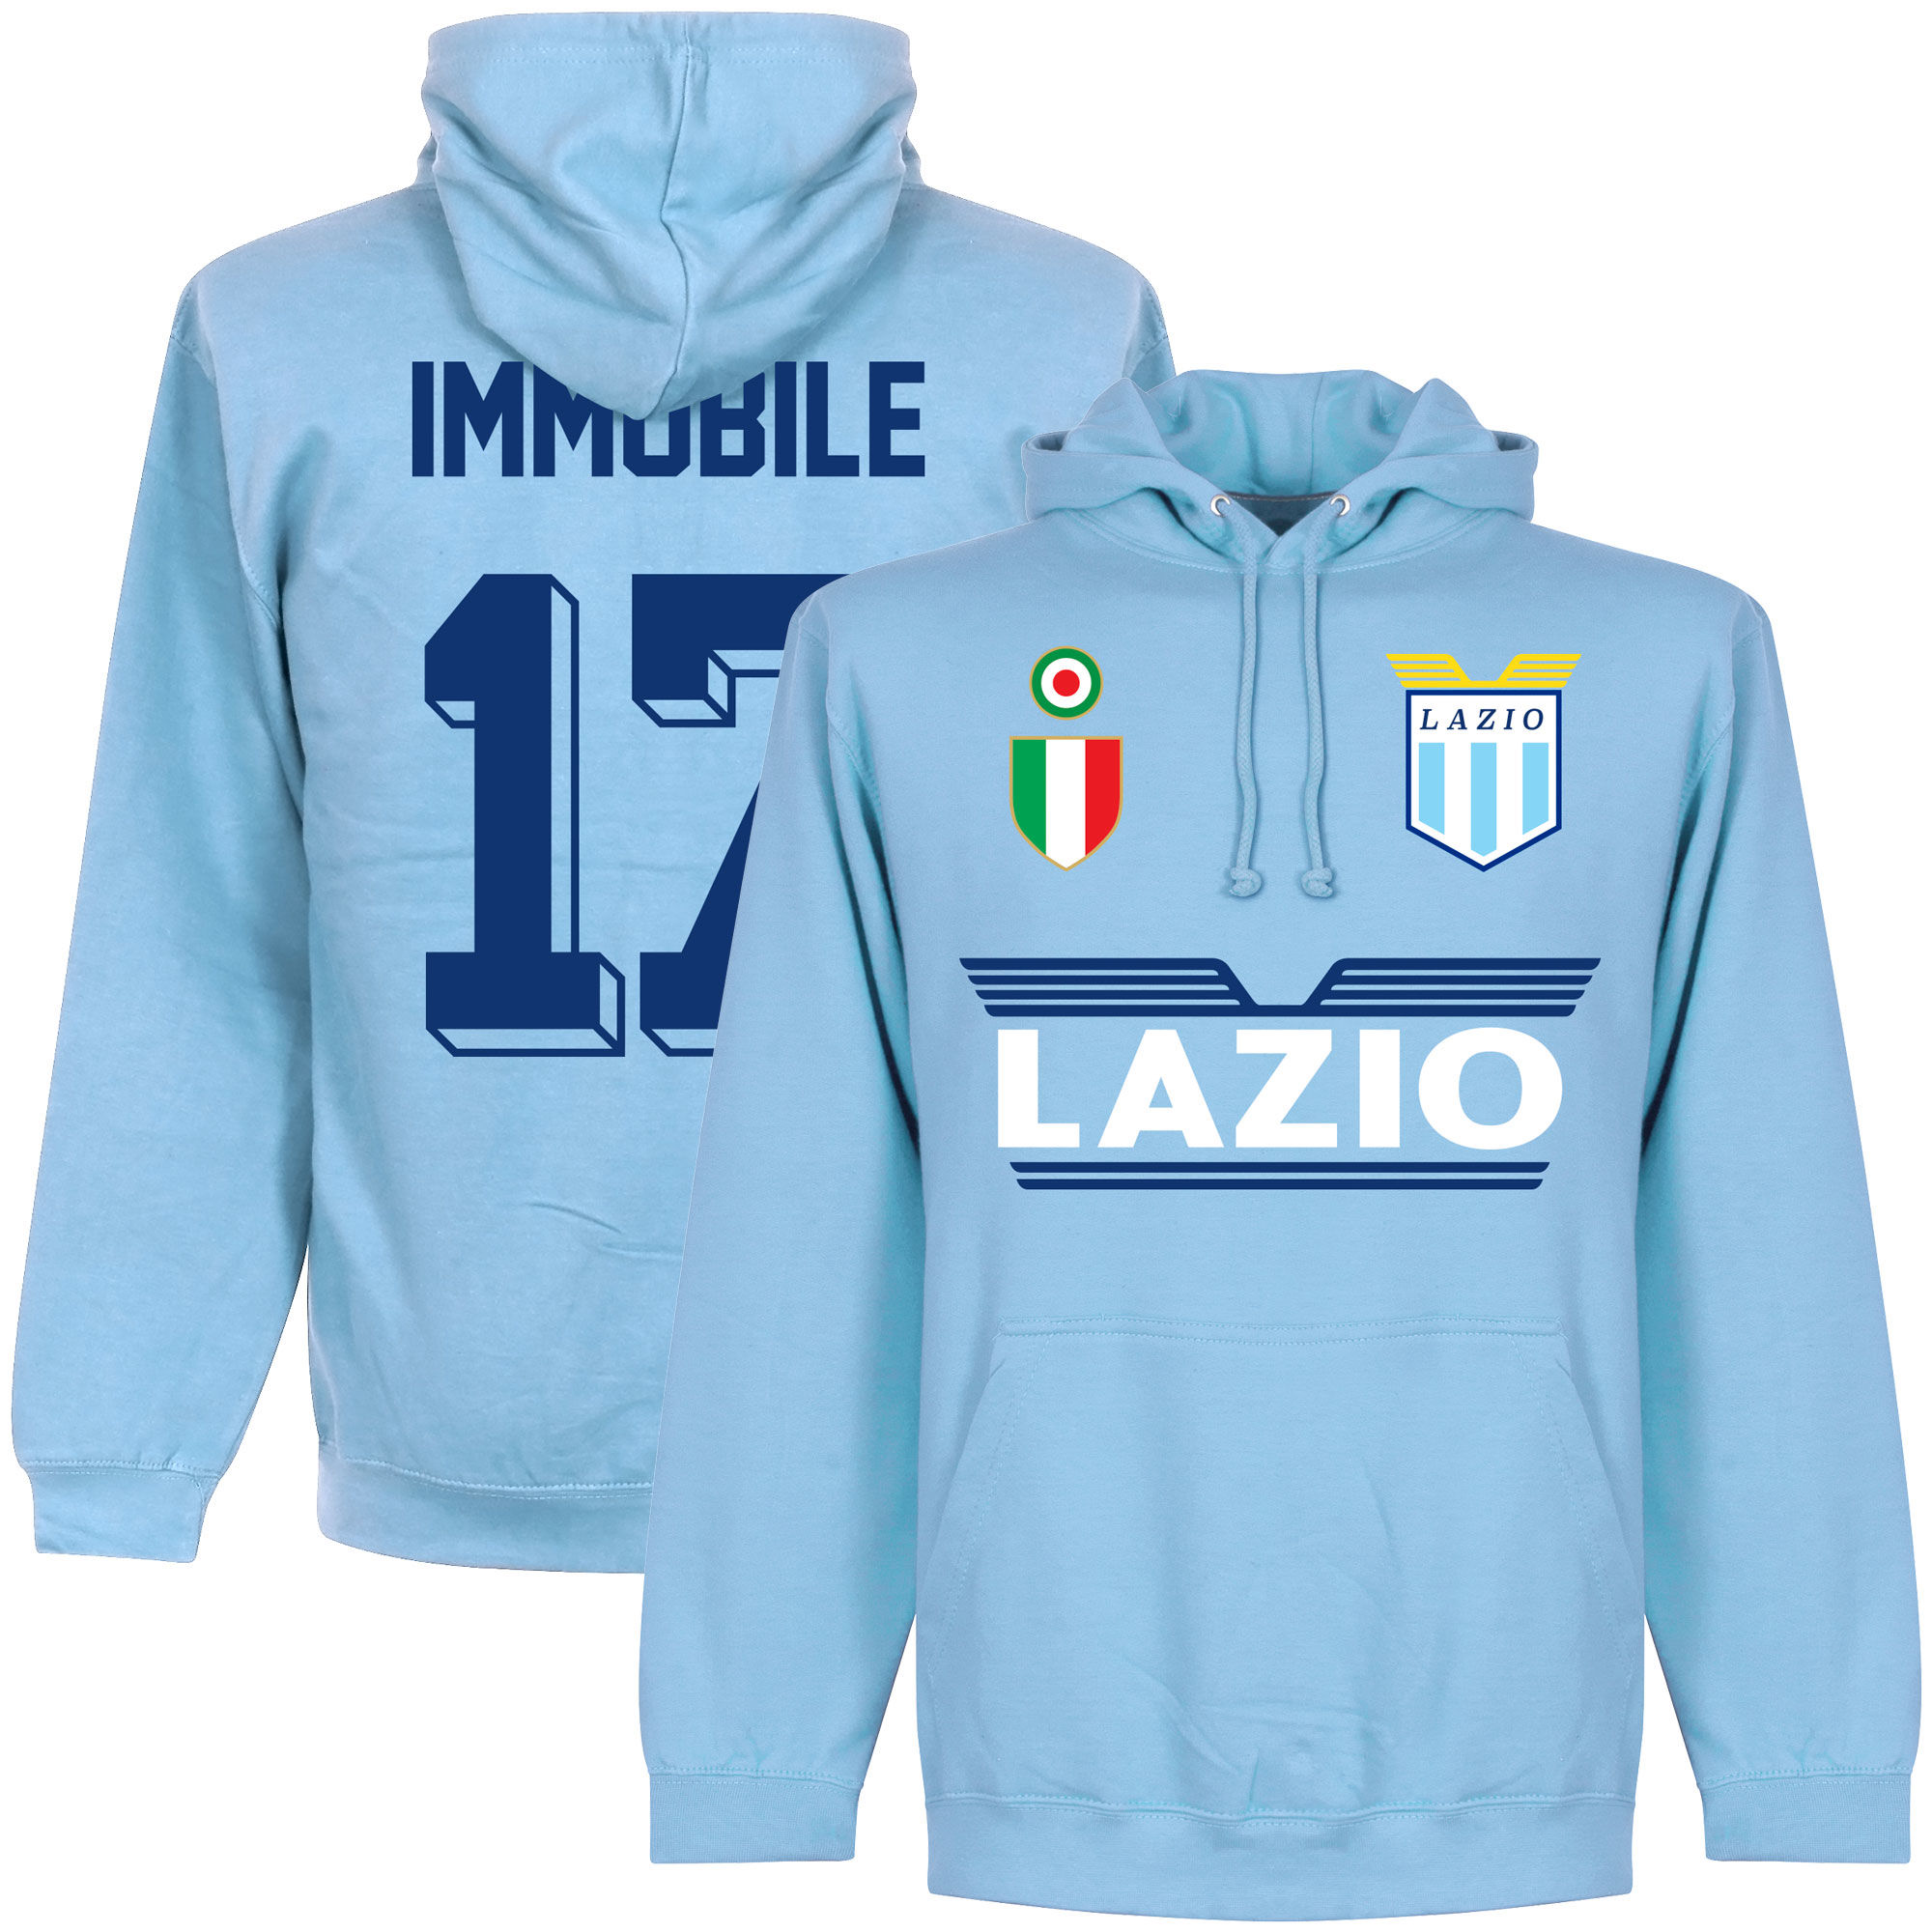 SS Lazio - Mikina s kapucí - číslo 17, Ciro Immobile, modrá